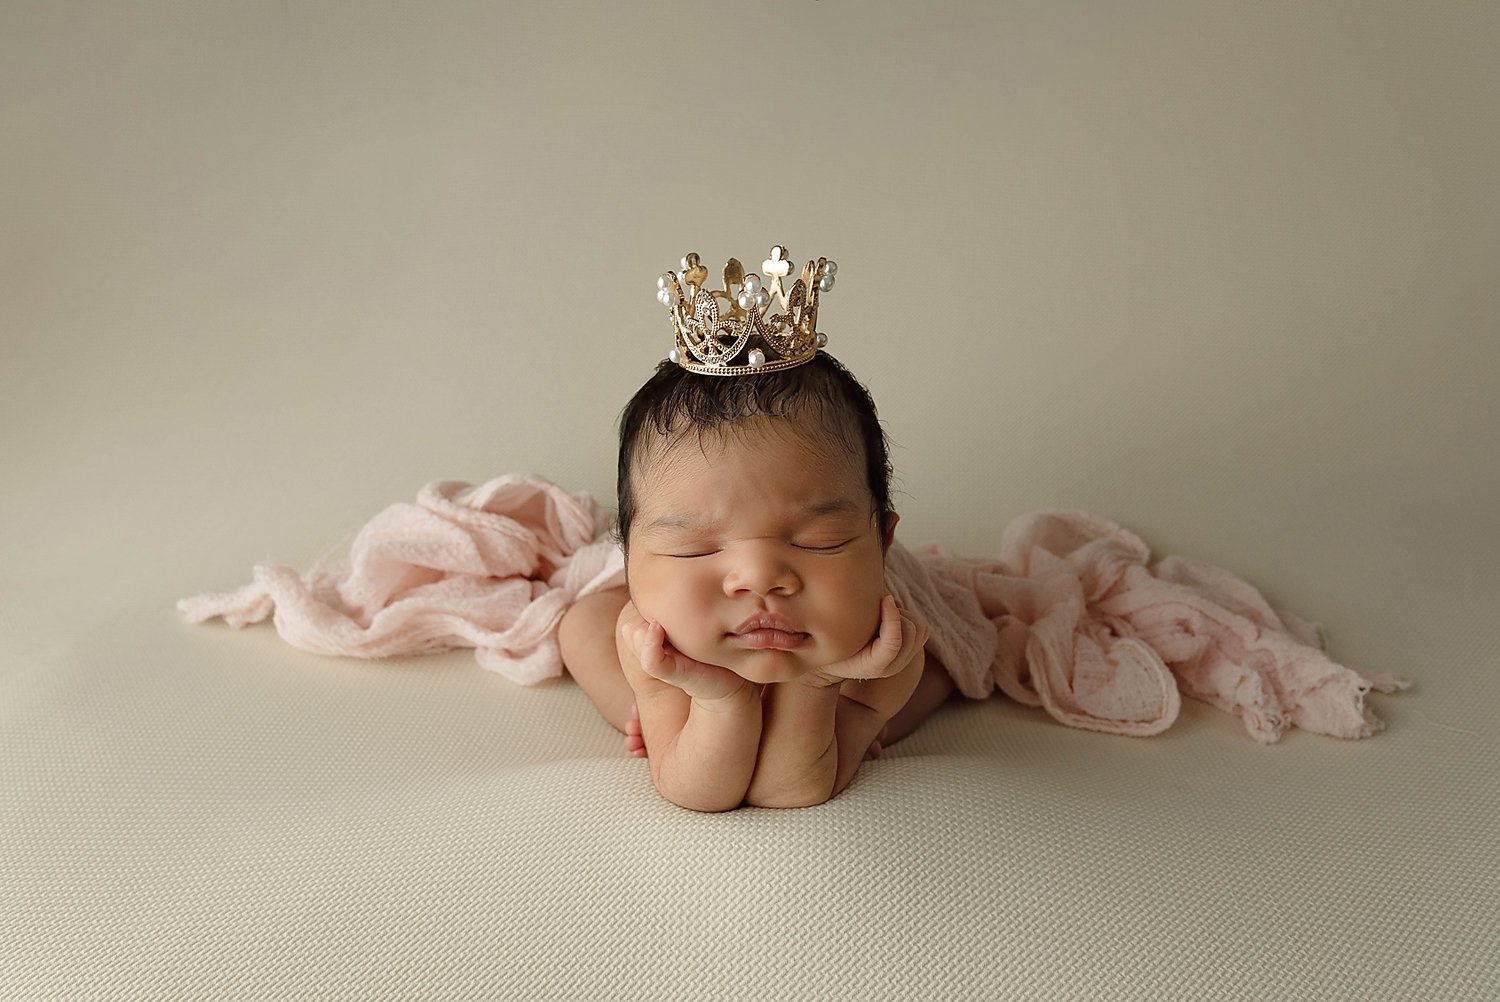 kimberly-gb-photography-newborn-recien-nacido-fotografia-bebe-fotografo-puerto-rico-076.jpg